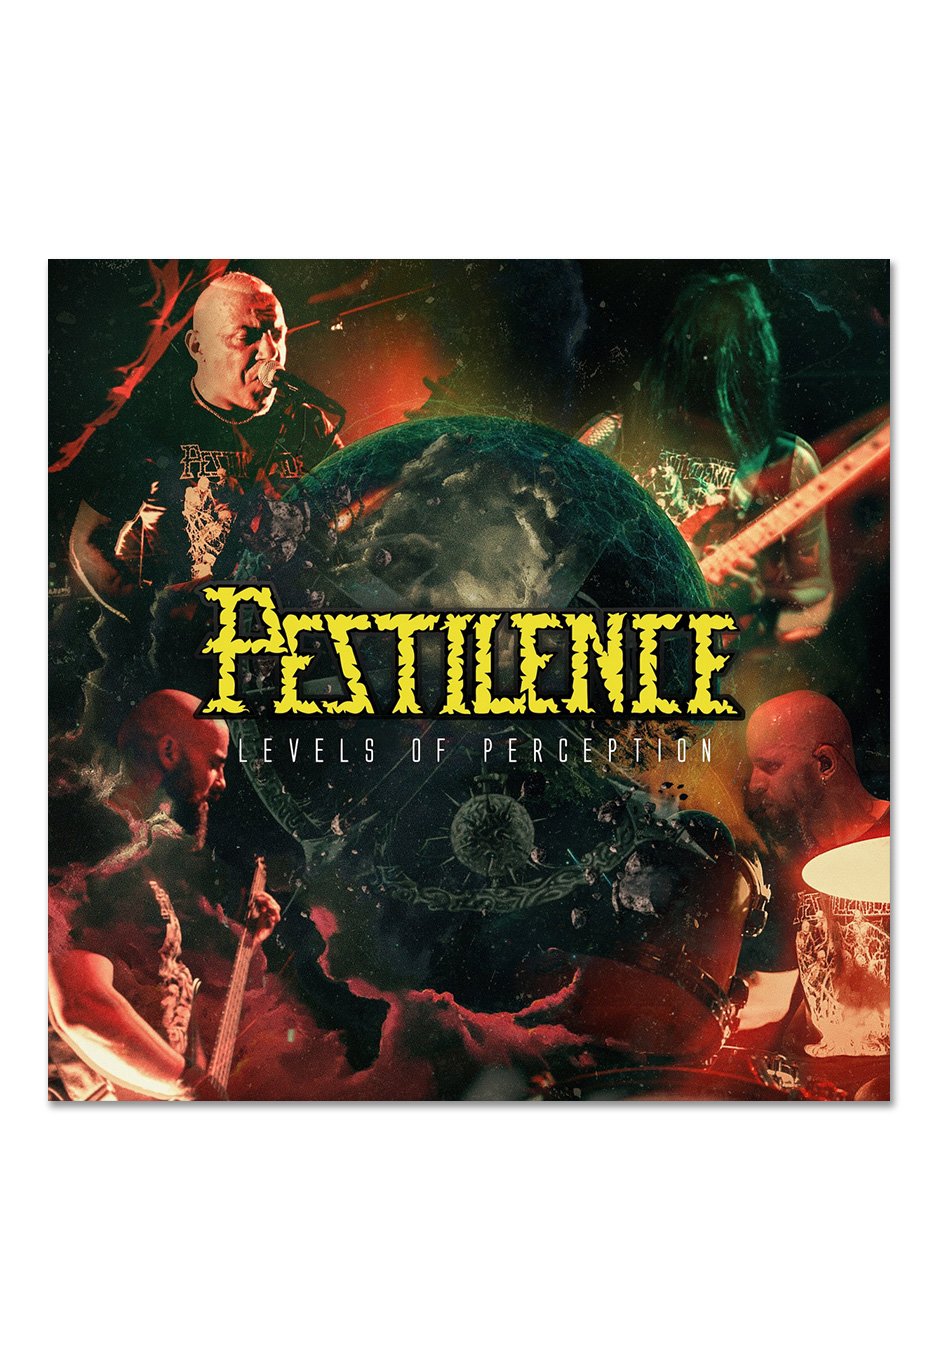 Pestilence - Levels Of Perception Ltd. Clear - Colored Vinyl